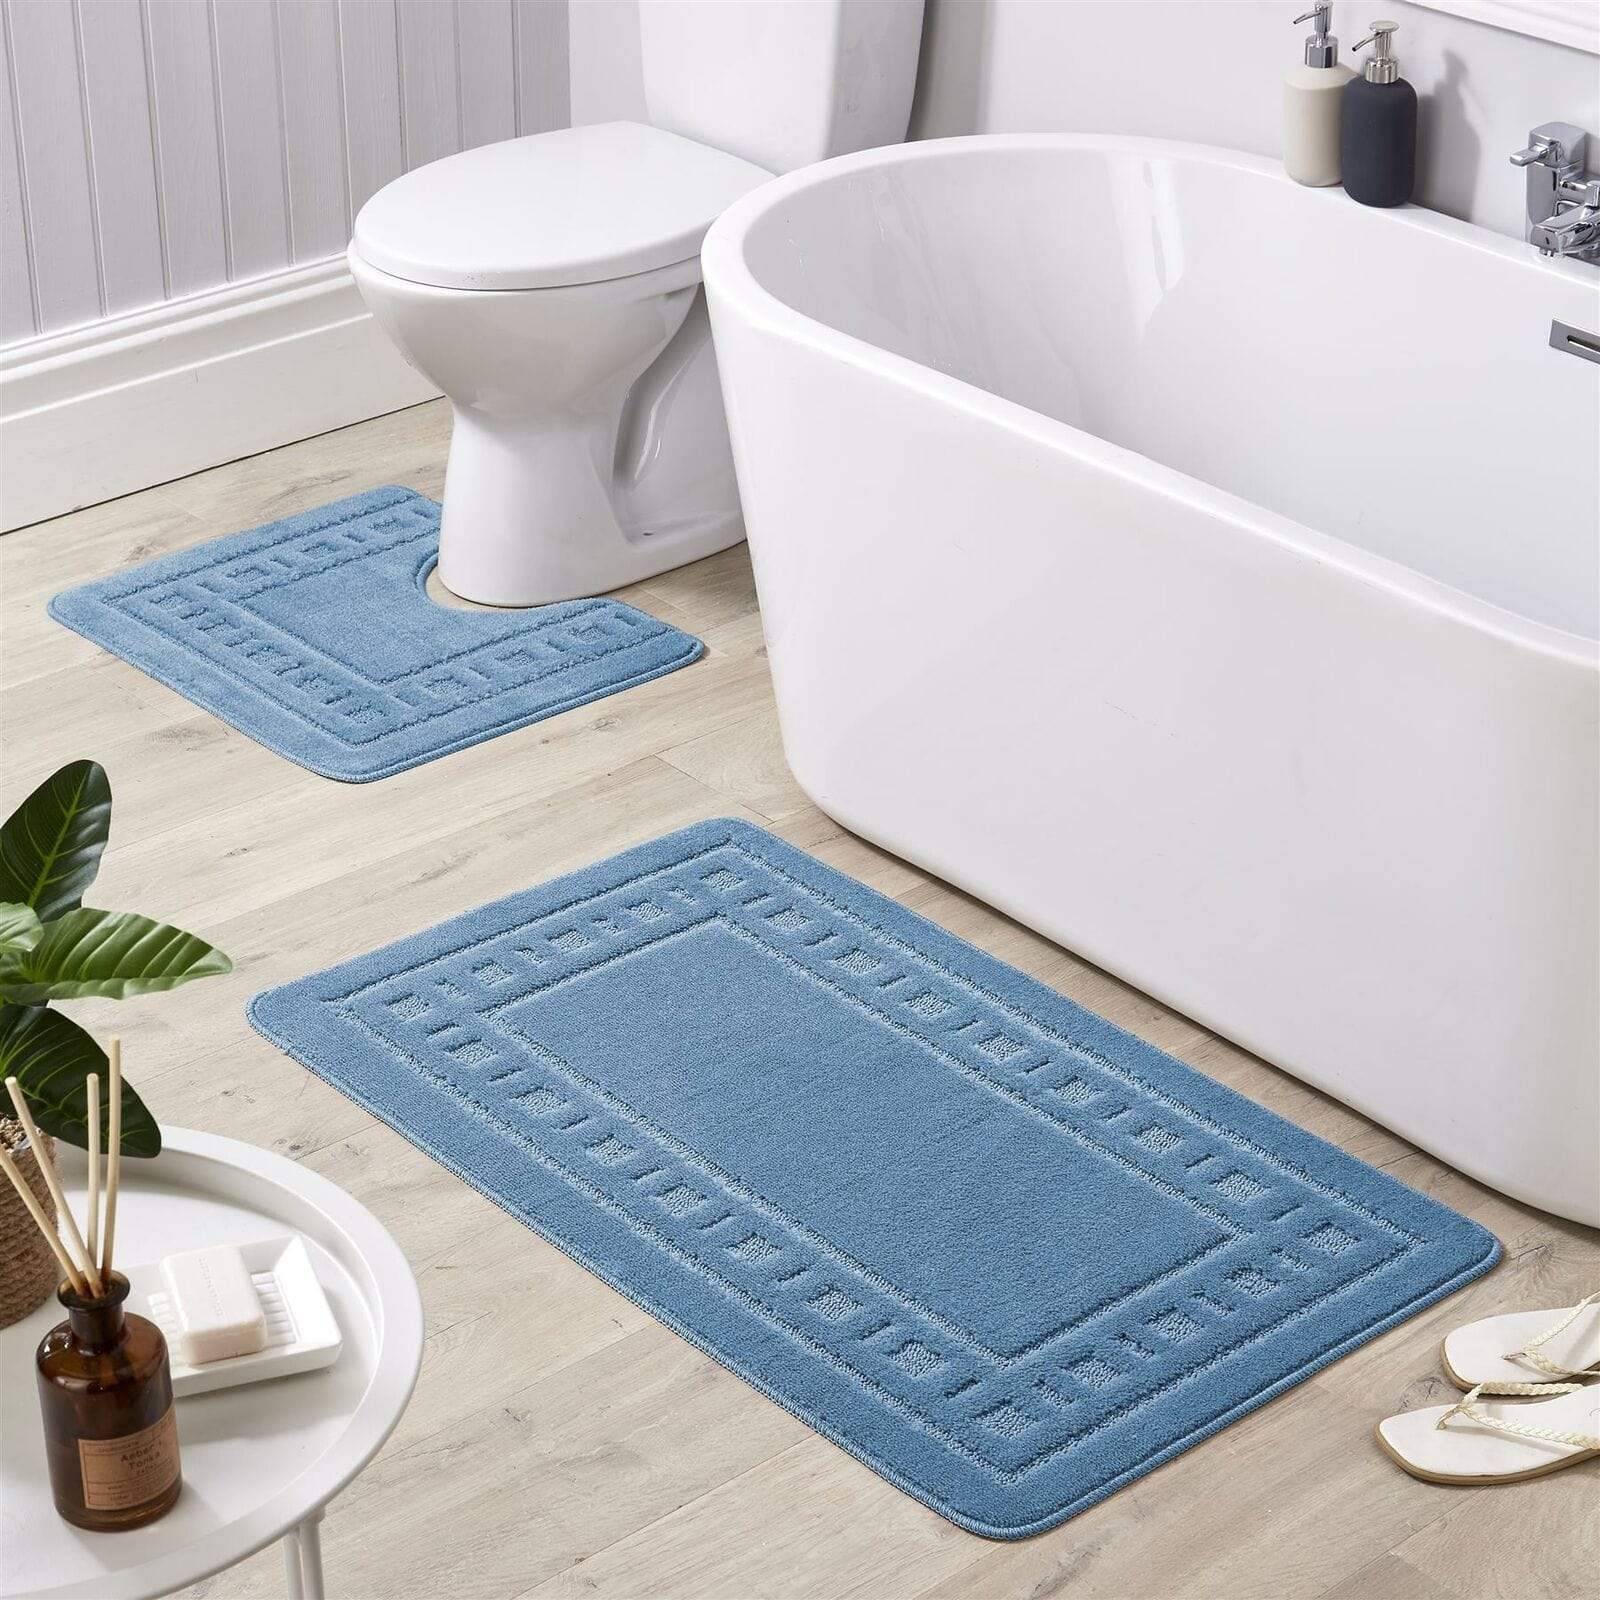 VinLoop Vinyl Pool, Bathroom, Locker Room, Shower, Spaghetti Mat by MattingExperts Drains Water, Comfortable Looped Mat (3x2, Blue)